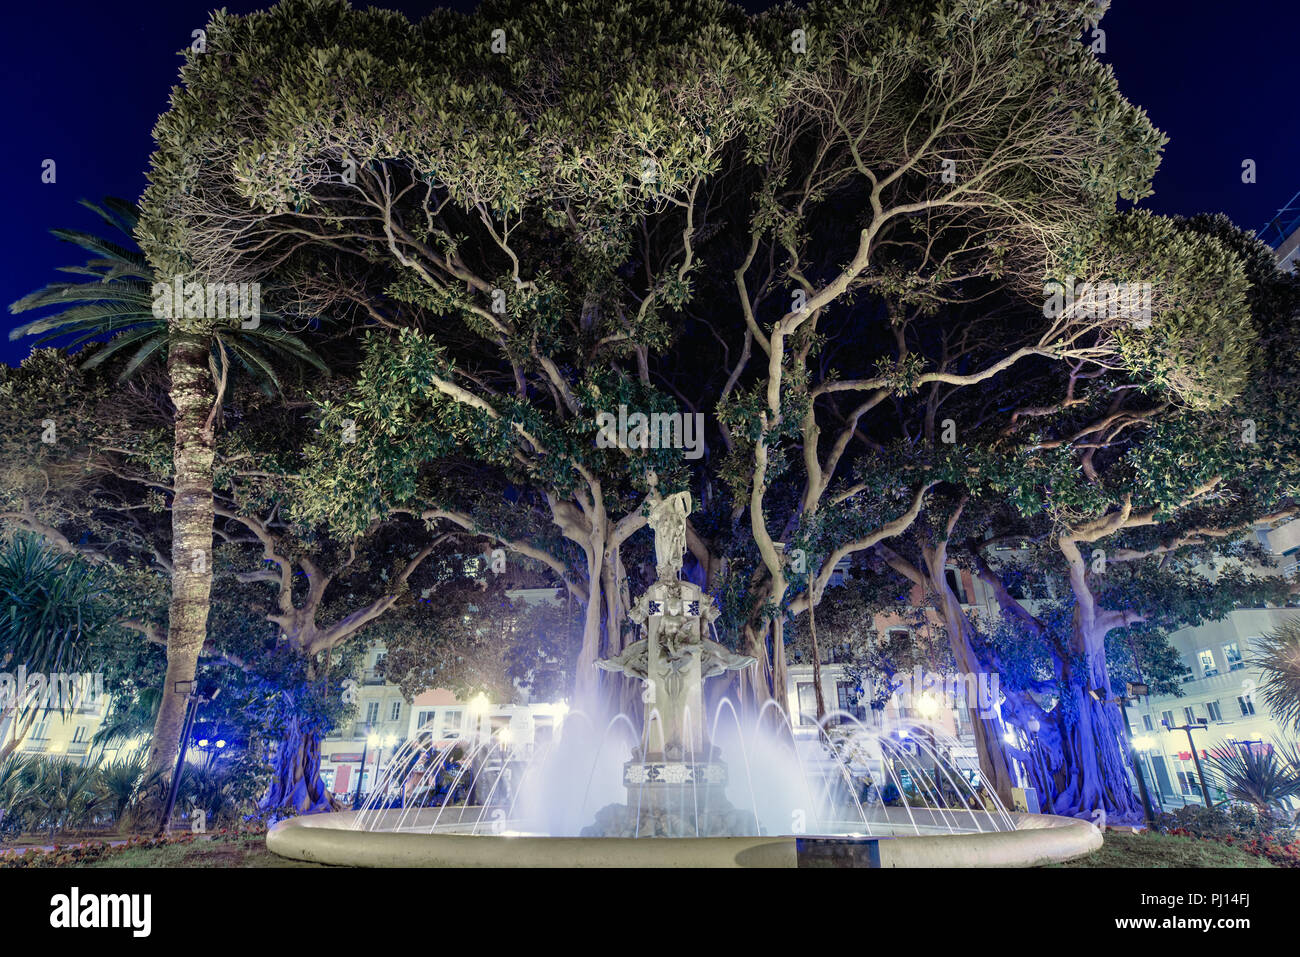 Plaza Gabriel Miro square. Fountain sculpture and giant rubber tree beautifully blue illuminated at night. Alicante city, Costa Blanca. Spain Stock Photo